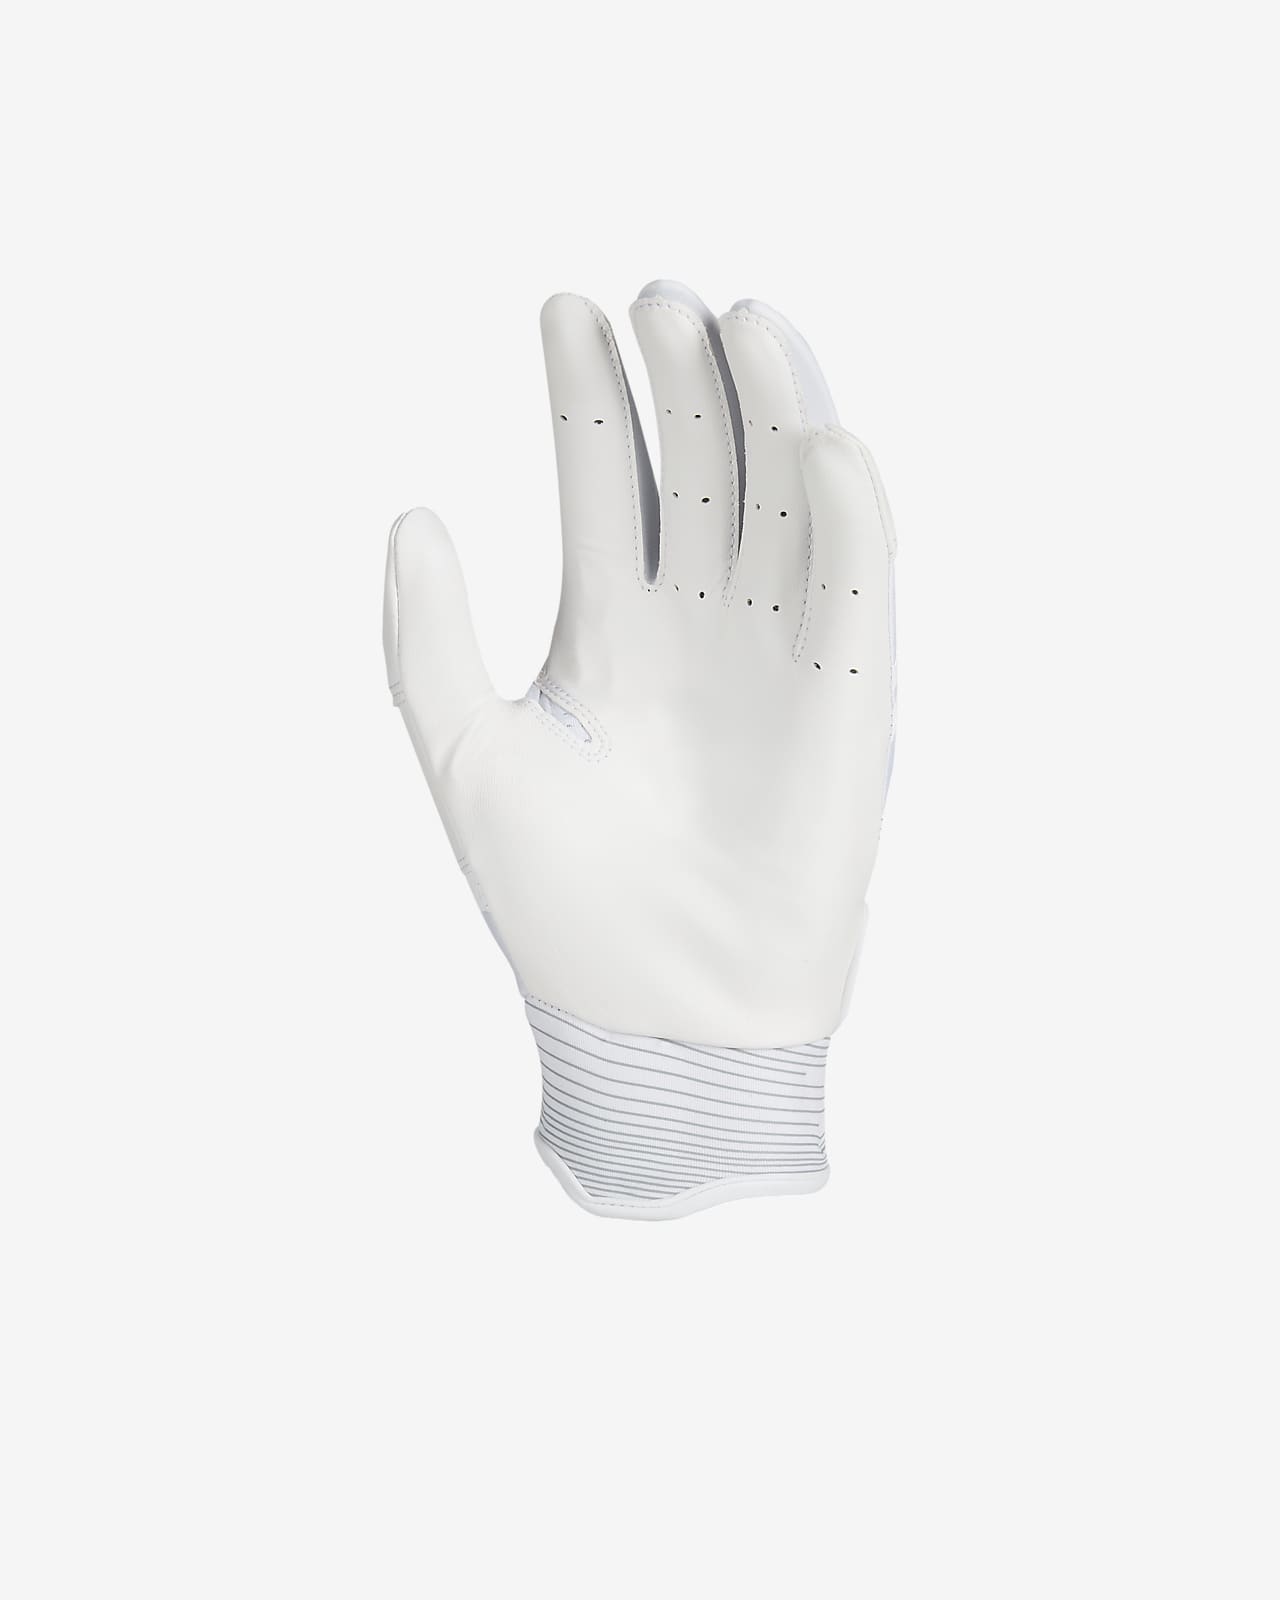 nike huarache gloves review